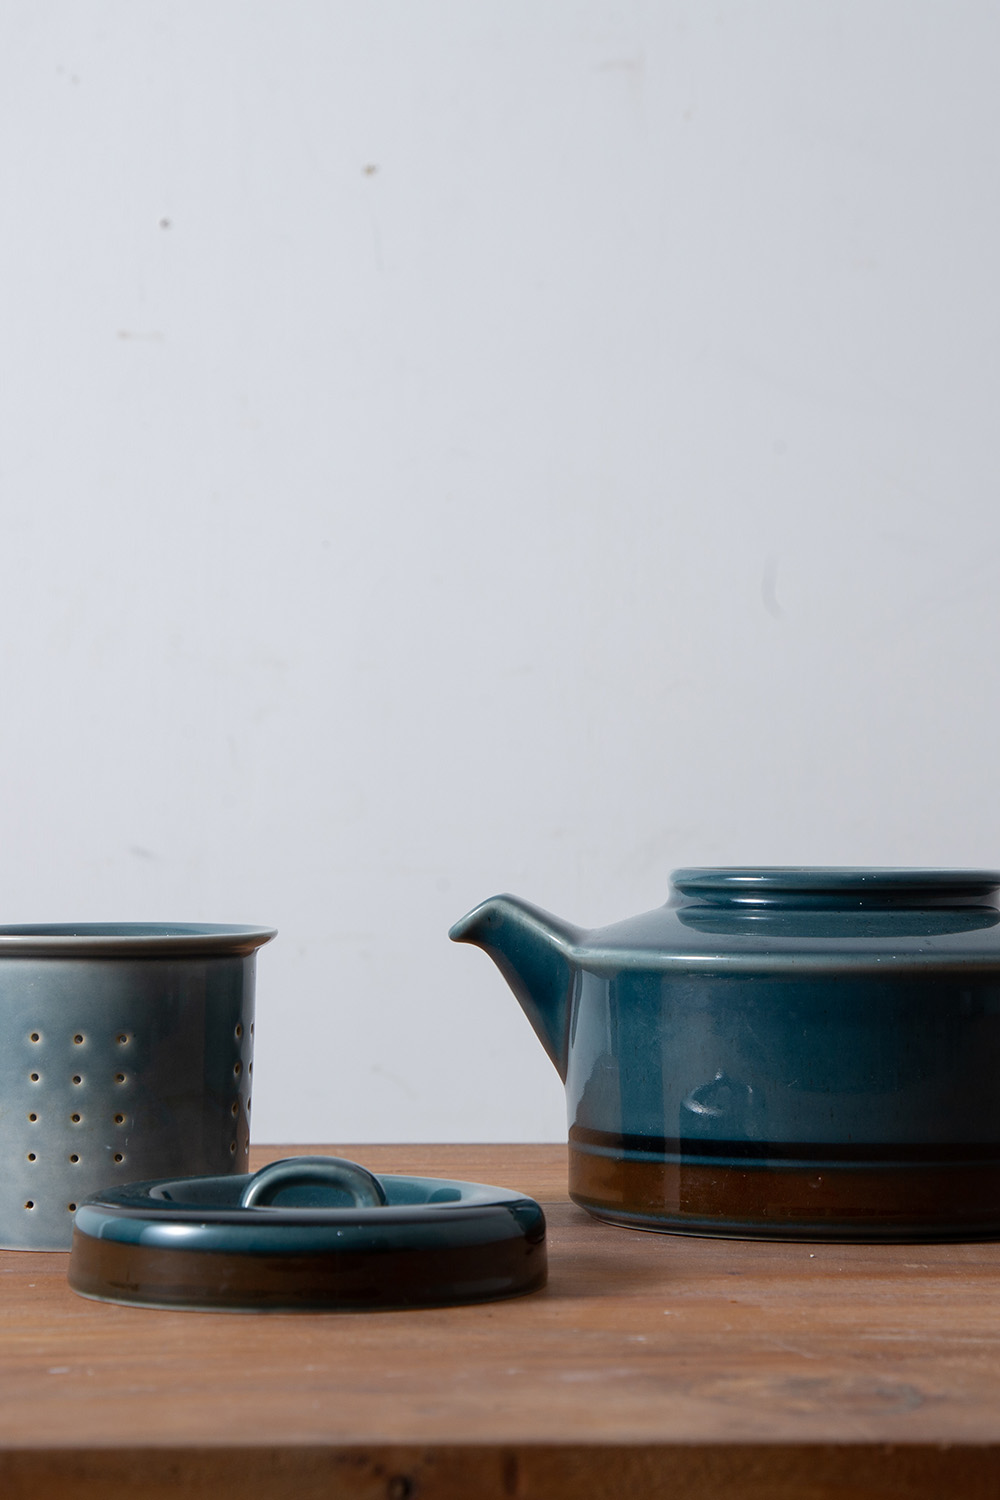 Tea Pot “Meri” for ARABIA by Ulla Procope